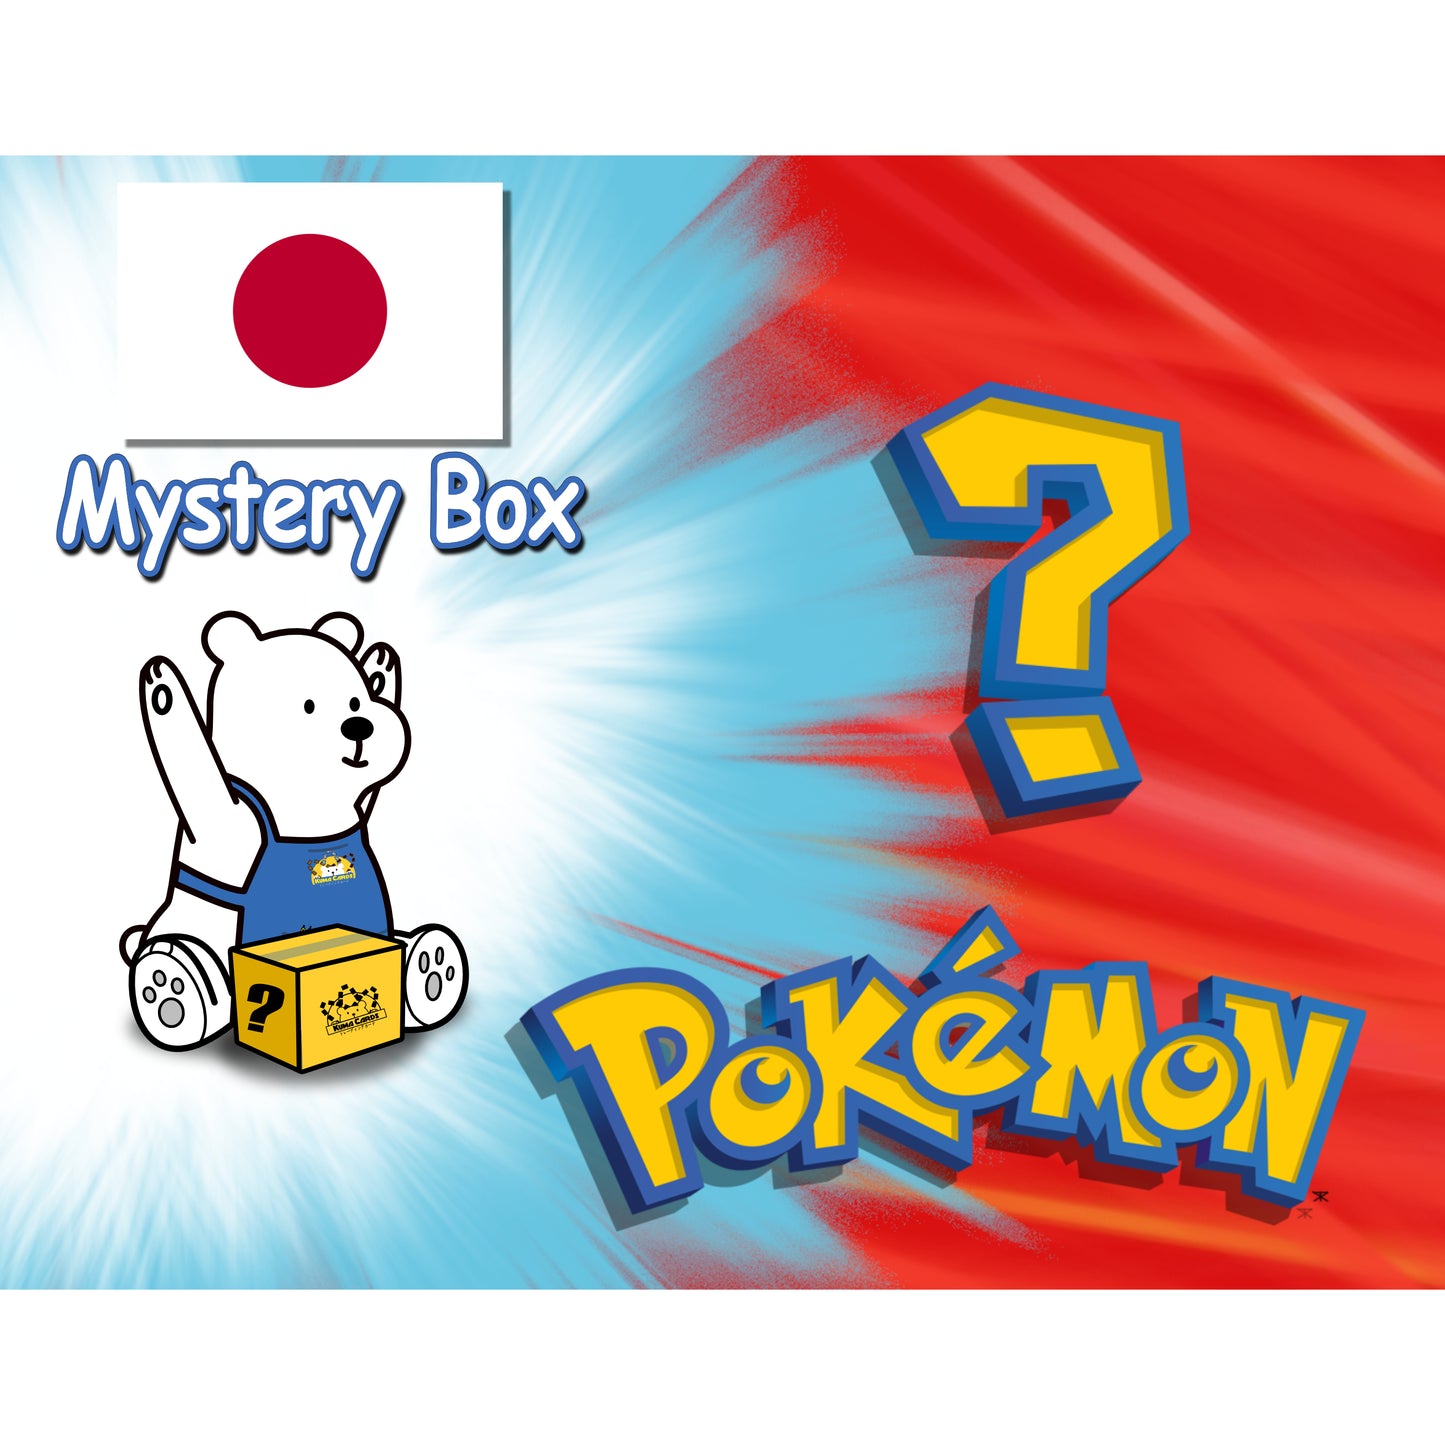 Pokémon Mystery Box - Japanese Inspired! 🇯🇵🙏🥳